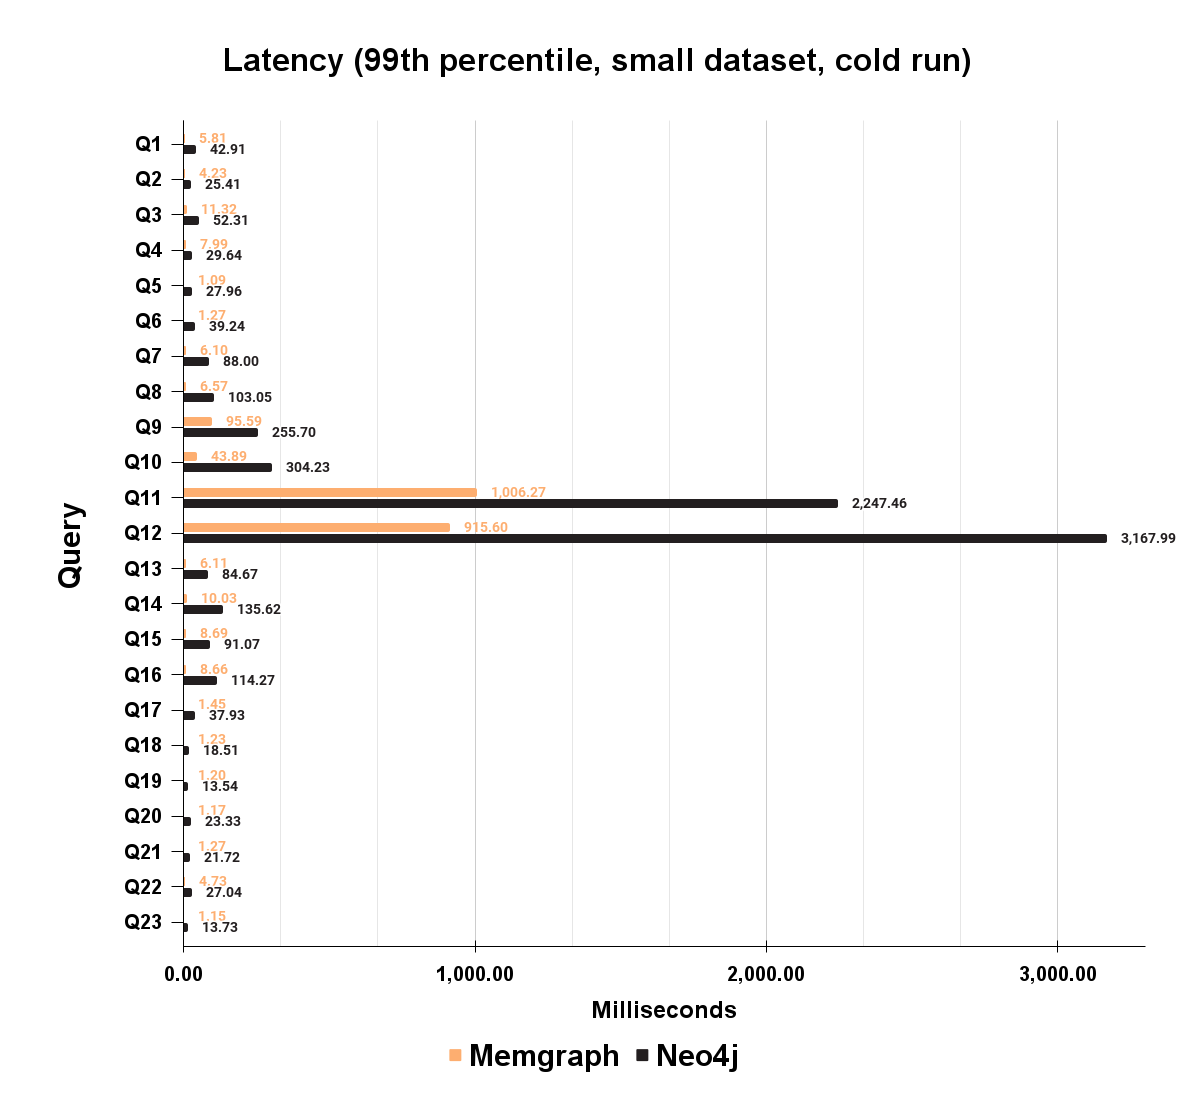 memgraph-vs-neo4j-a-performance-comparison-latency-summary